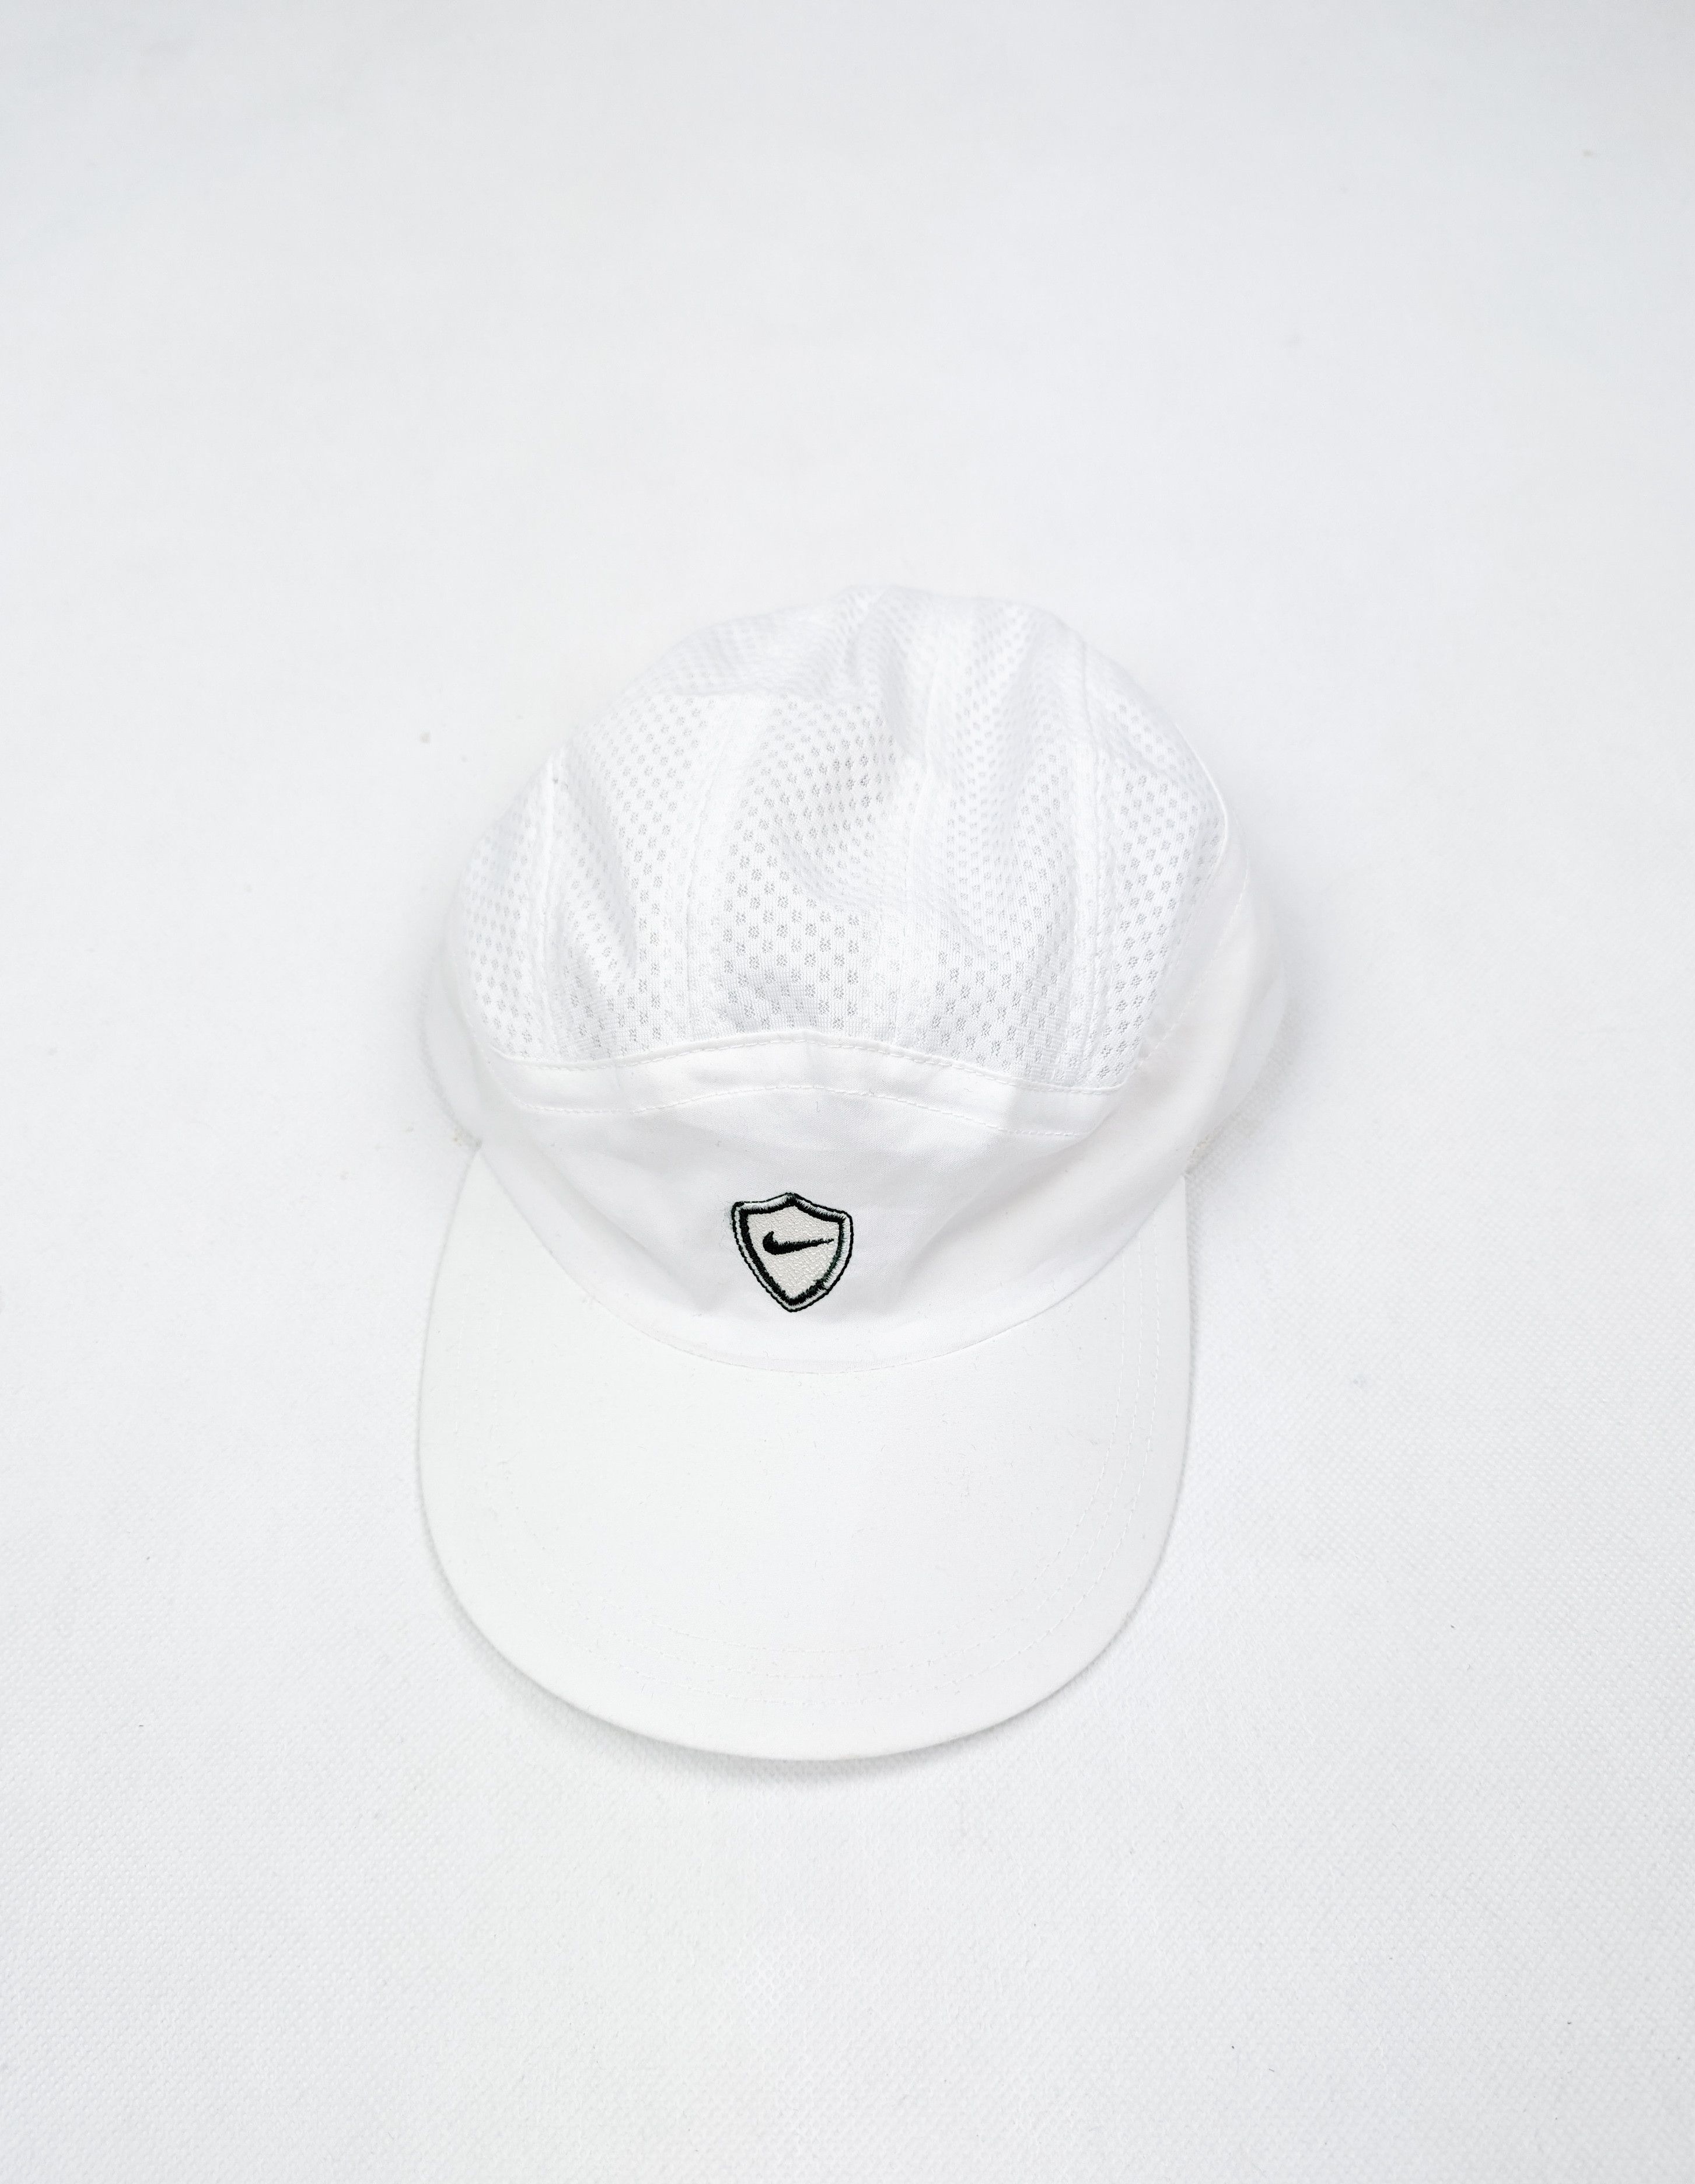 Nike Nike vintage white cap hat | Grailed